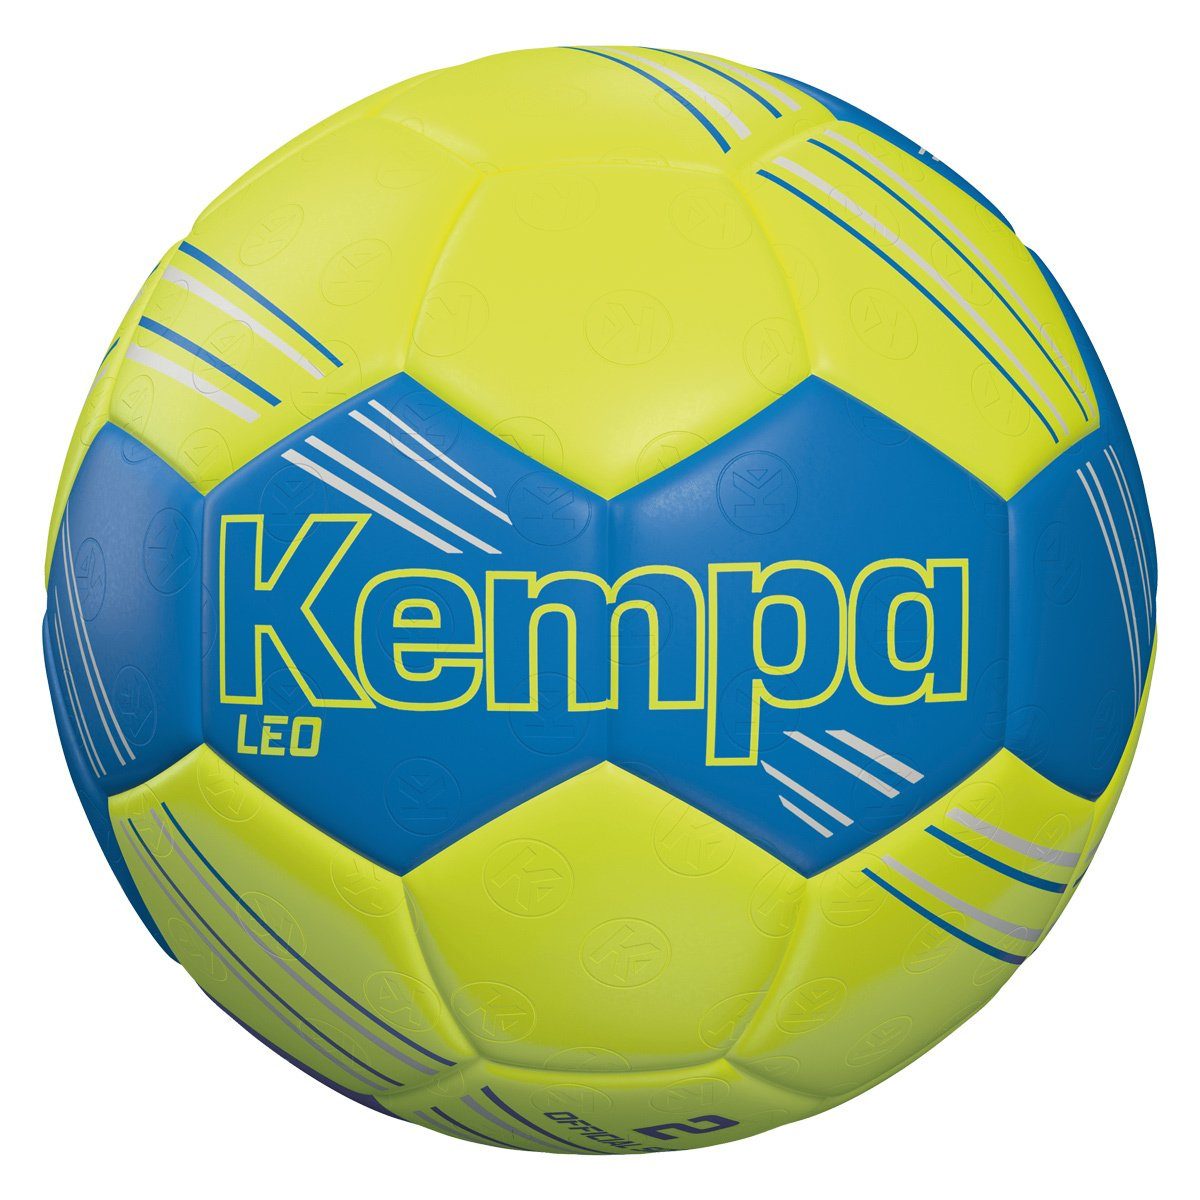 Kempa Handball Kempa Handball LEO pink/aqua